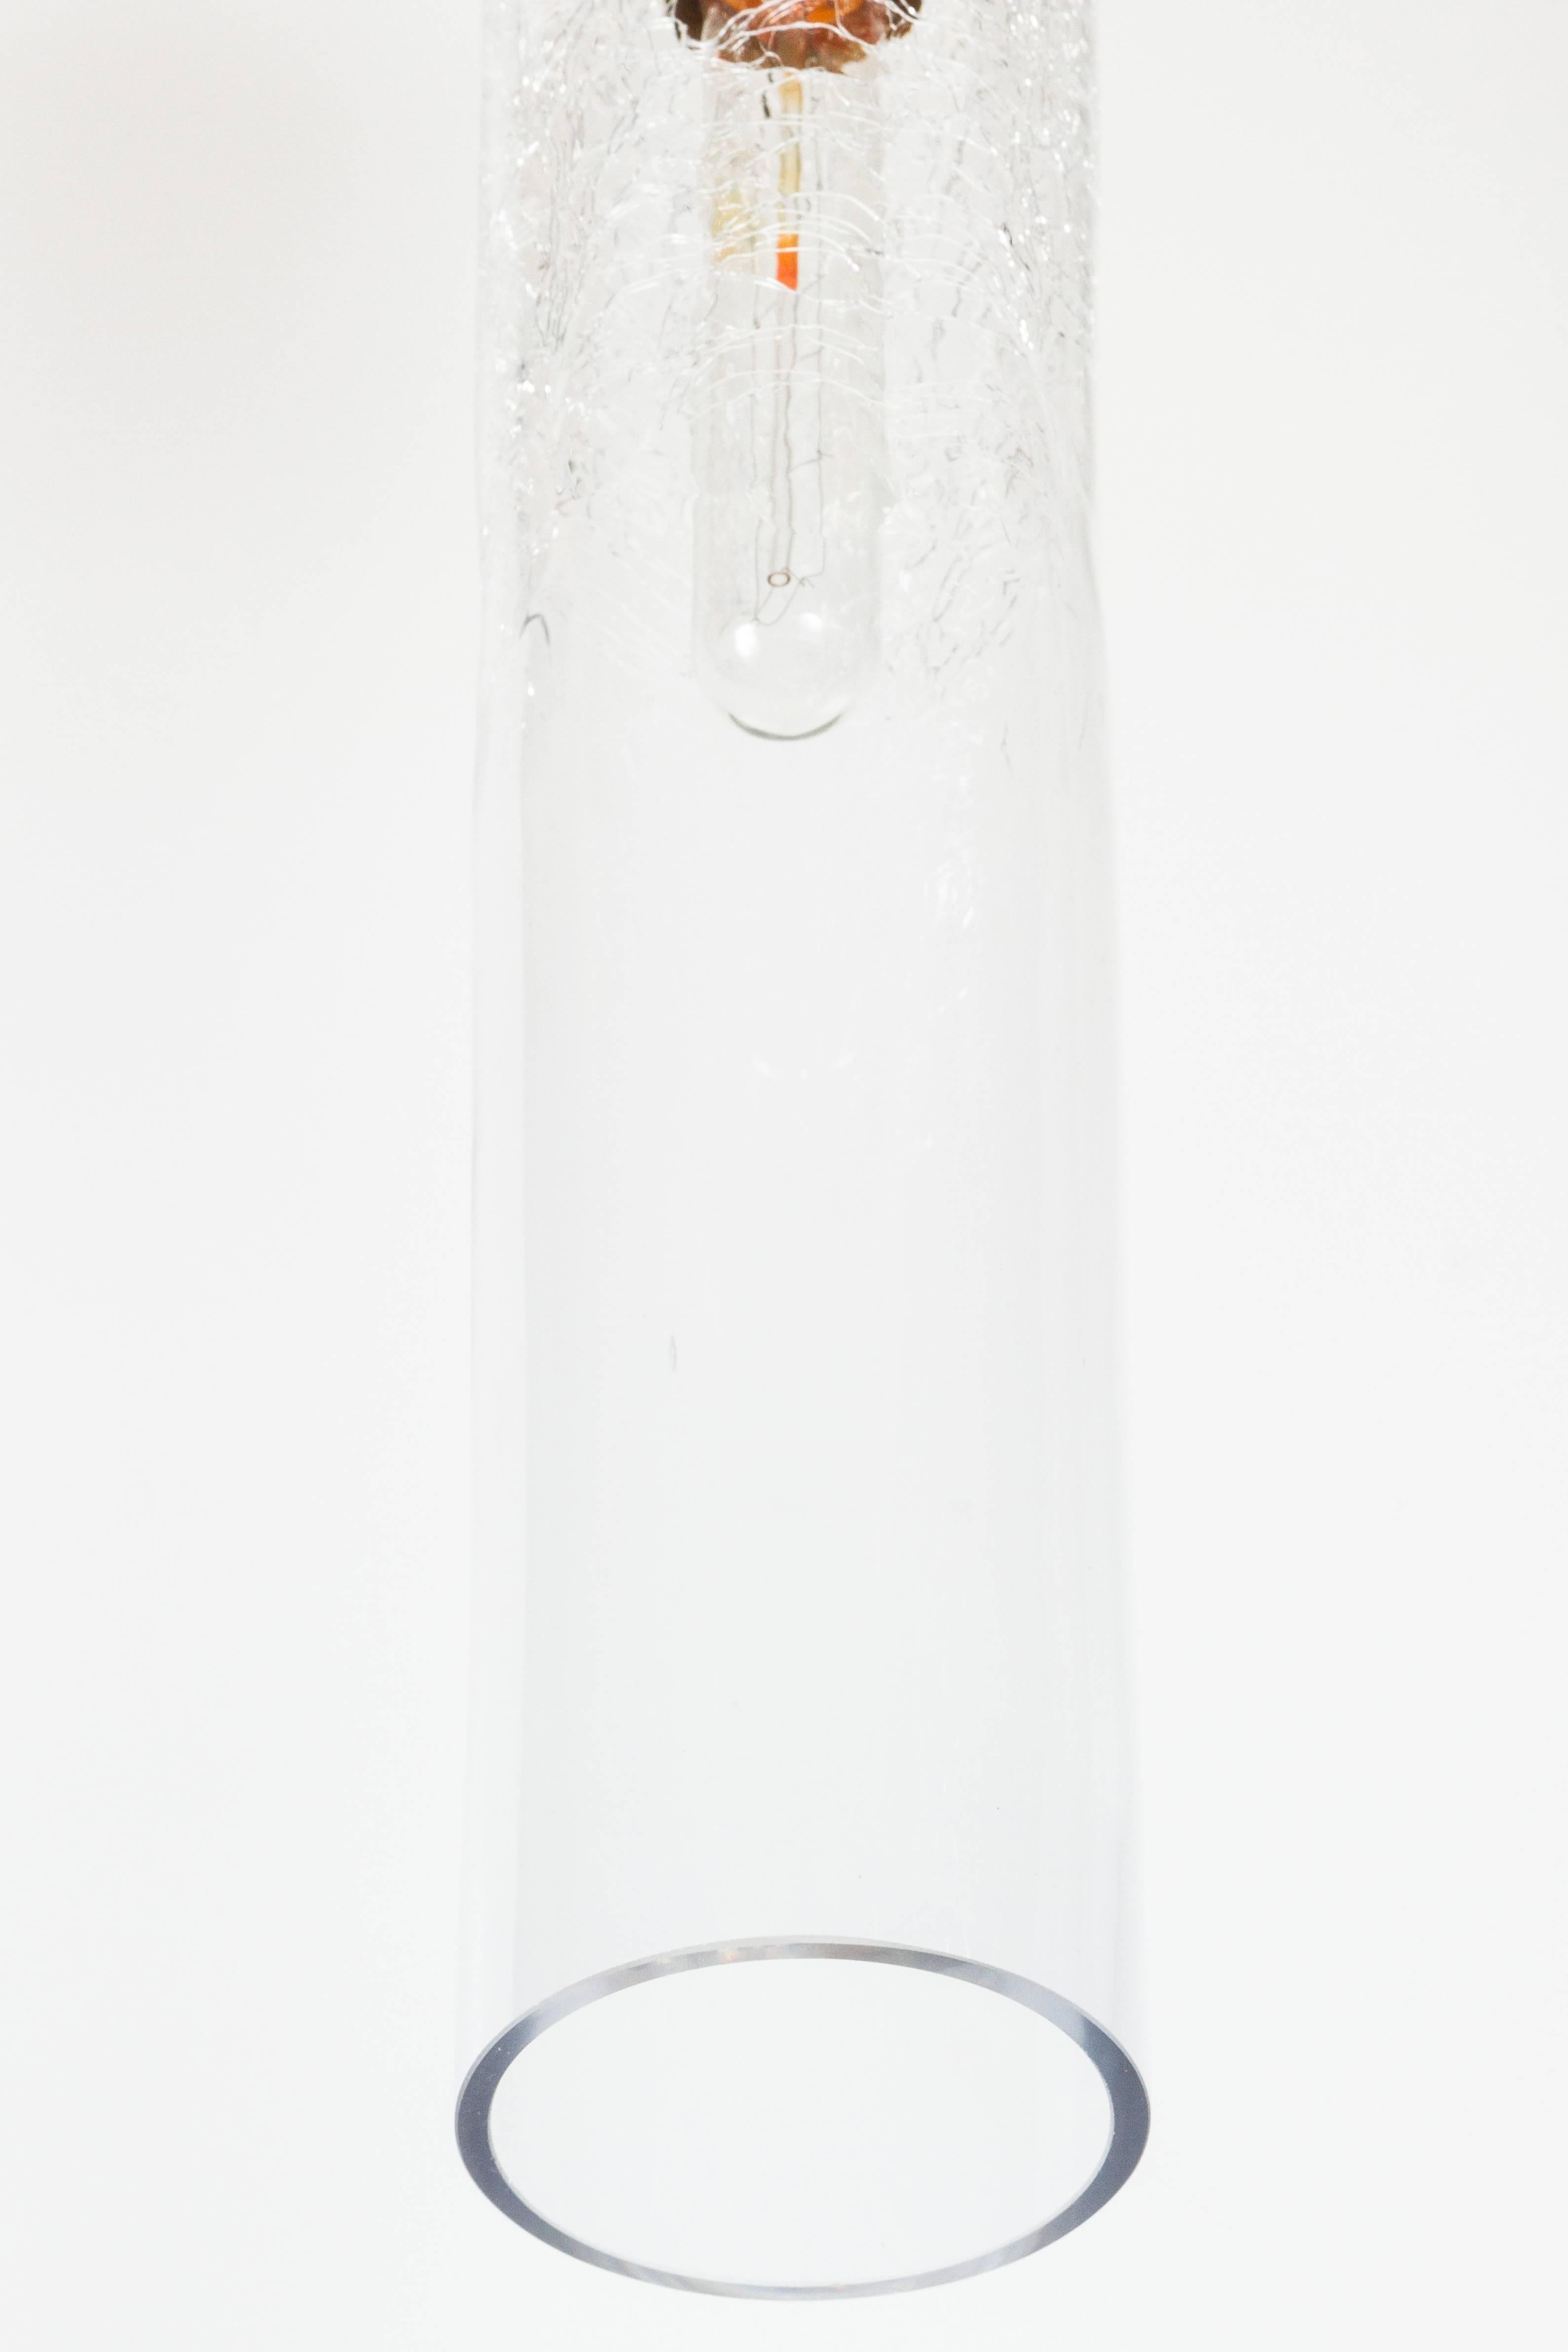 American Modern Minimalist Glass Pendant For Sale